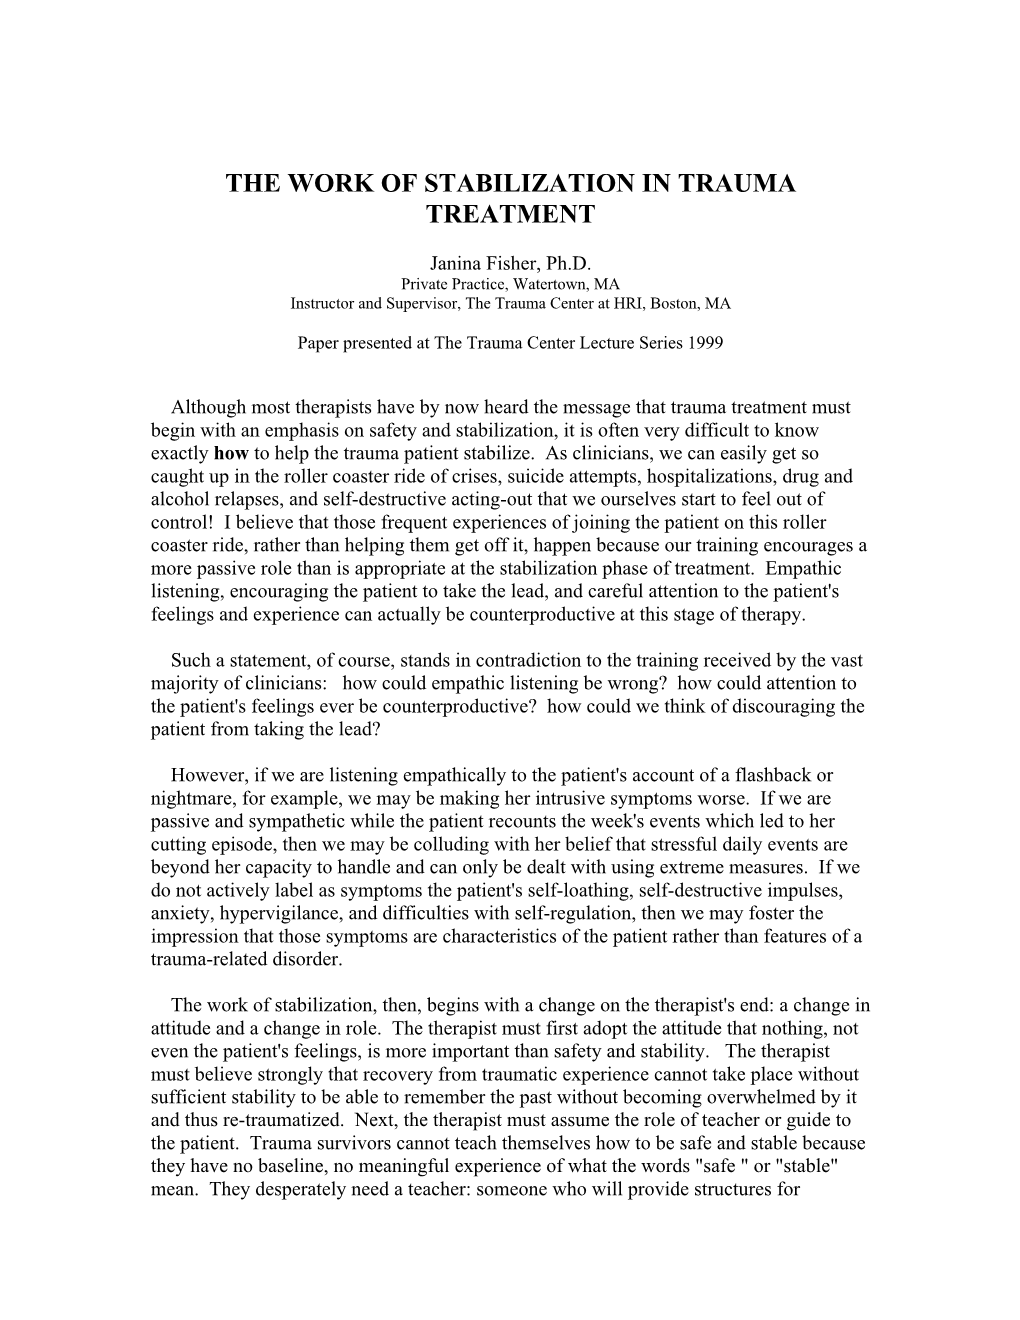 The Work of Stabilization in Trauma Treatment